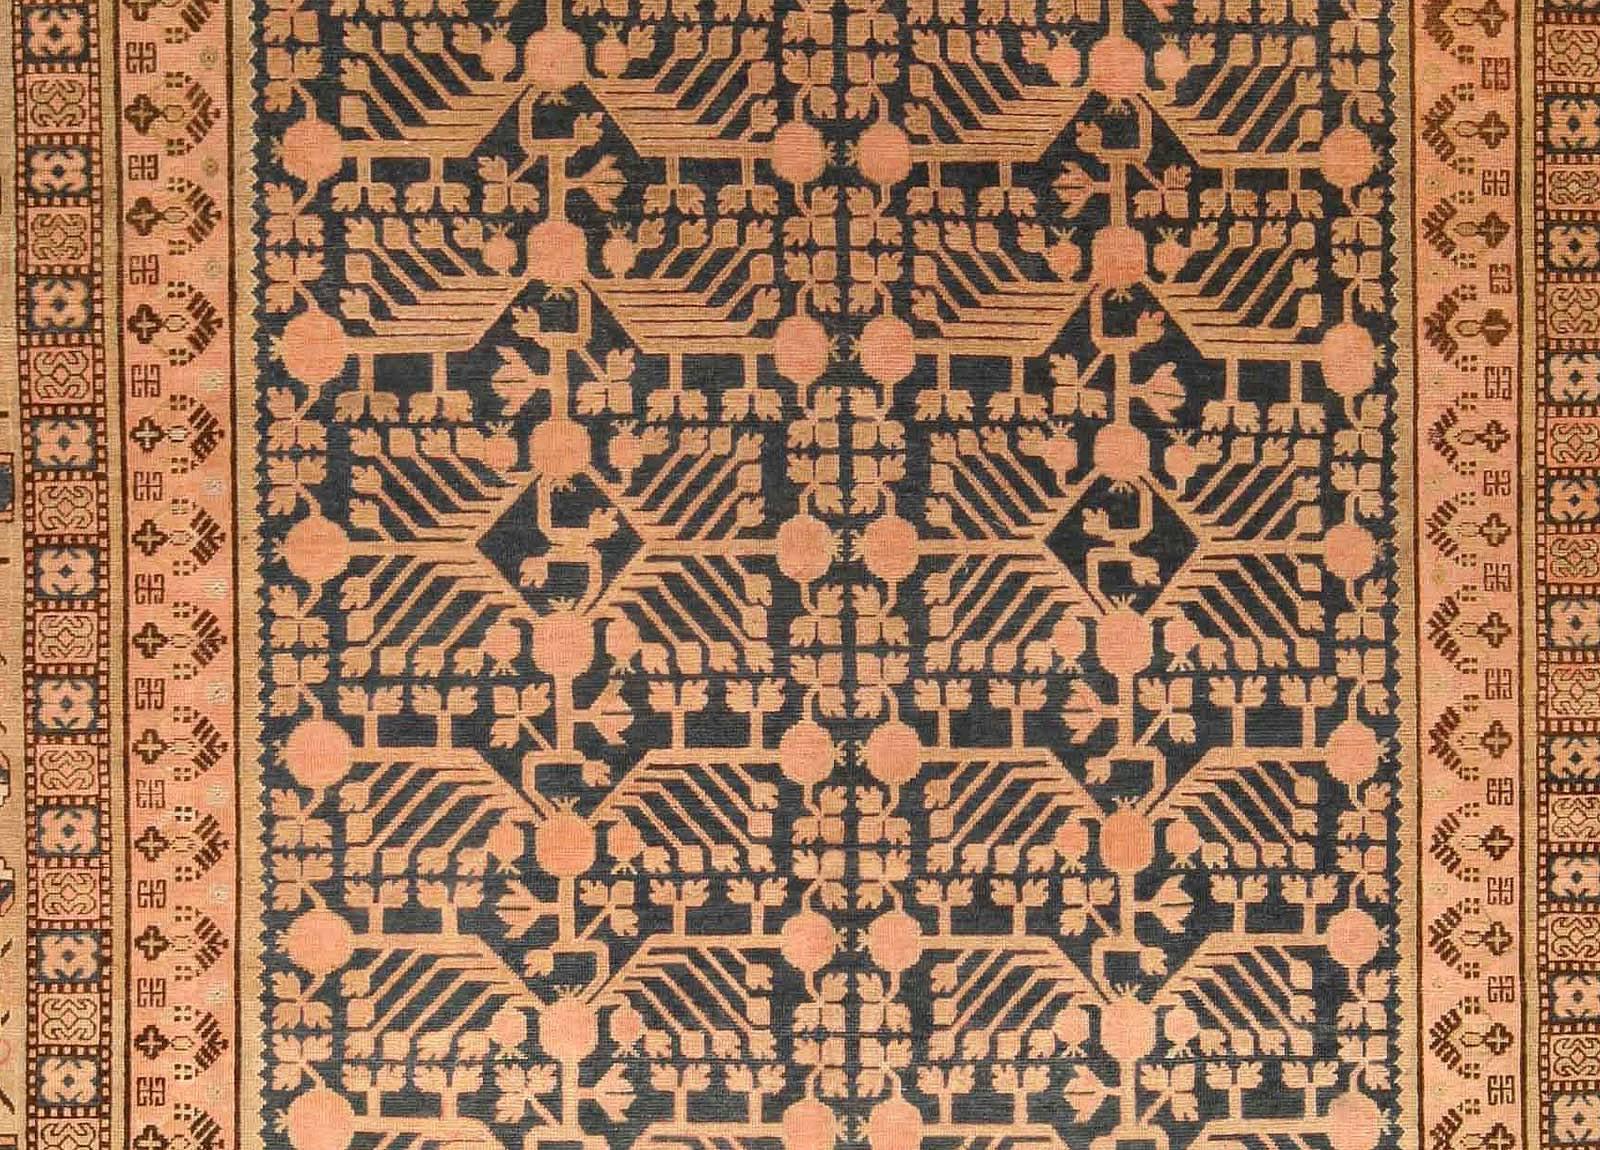 19th century Samarkand 'Khotan' indigo blue and beige hand knotted wool rug
Size: 6'4